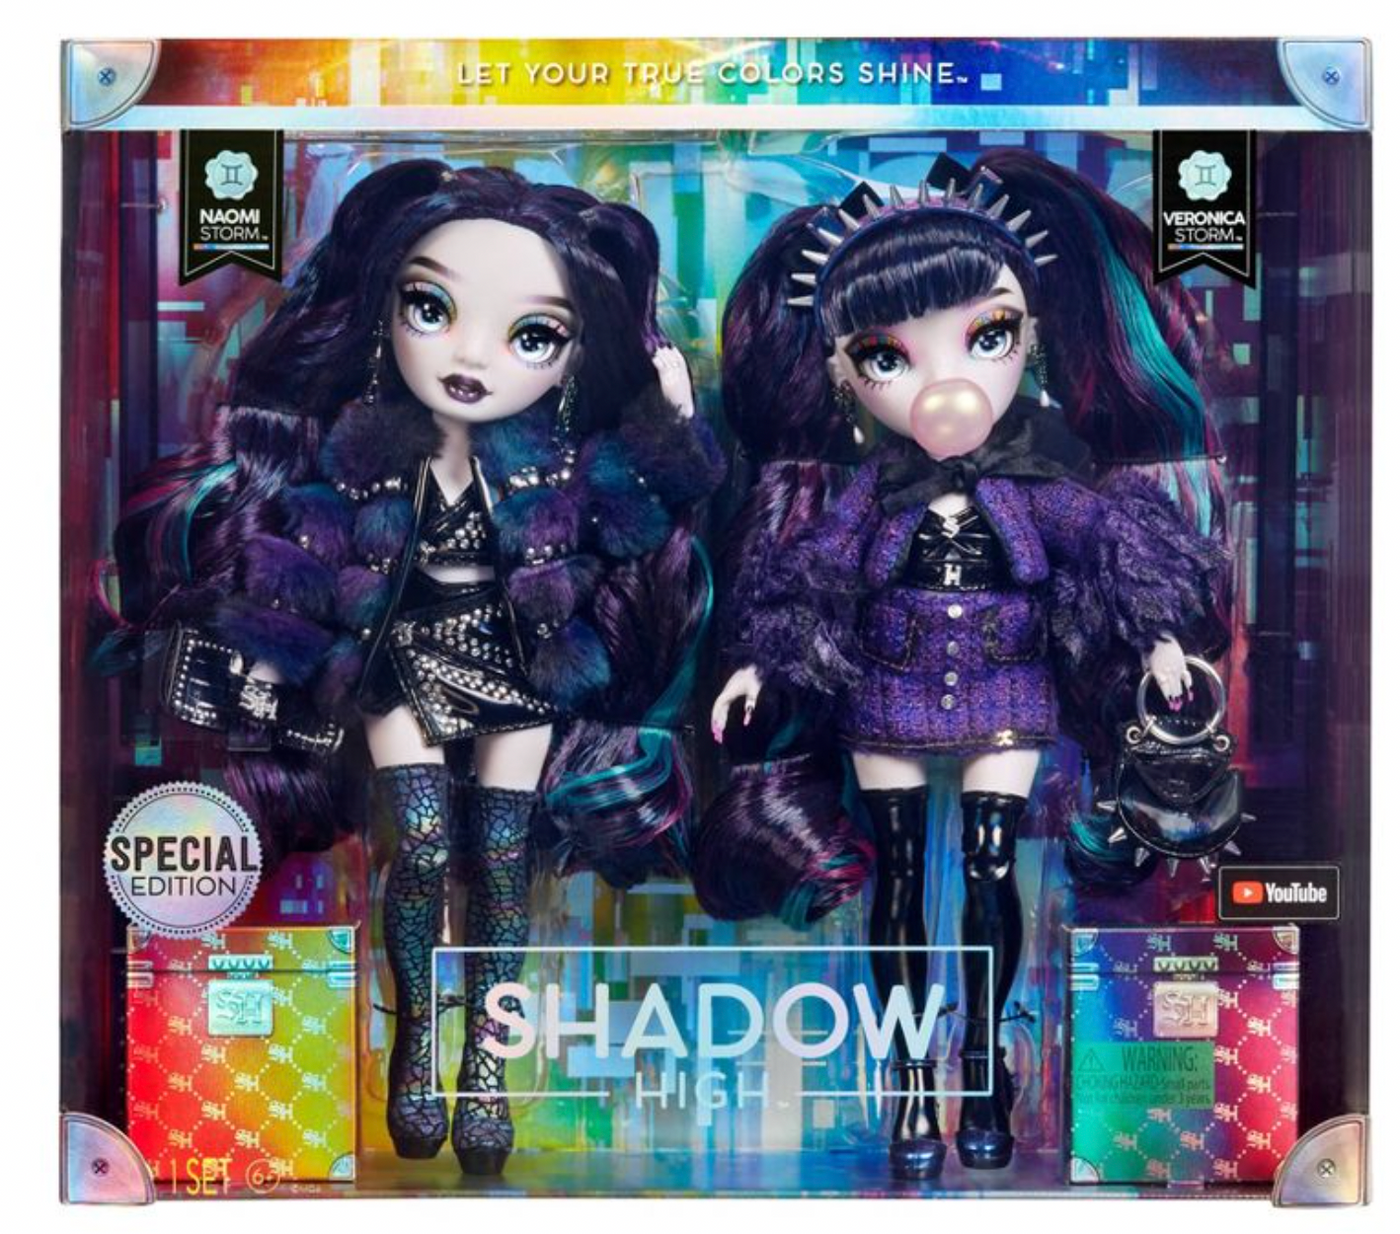 Shadow High Special Edition Twins Naomi & Veronica Storm Fashion Doll New